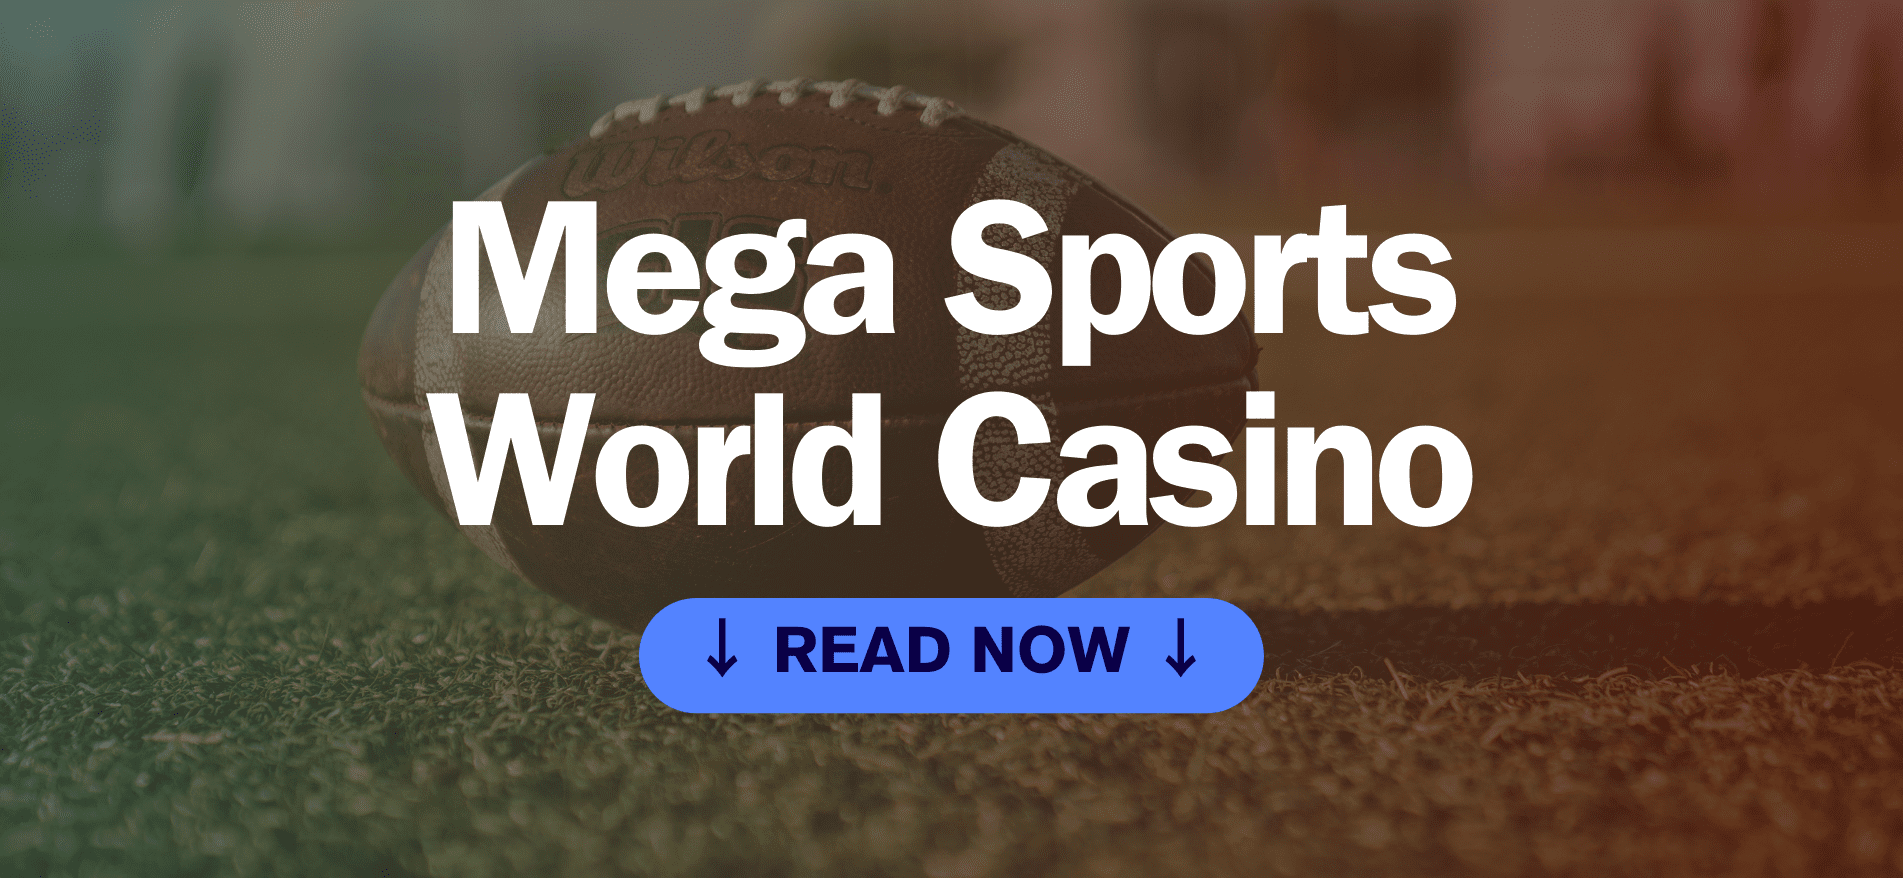 mega sports casino review pinoyonlinecasino.ph